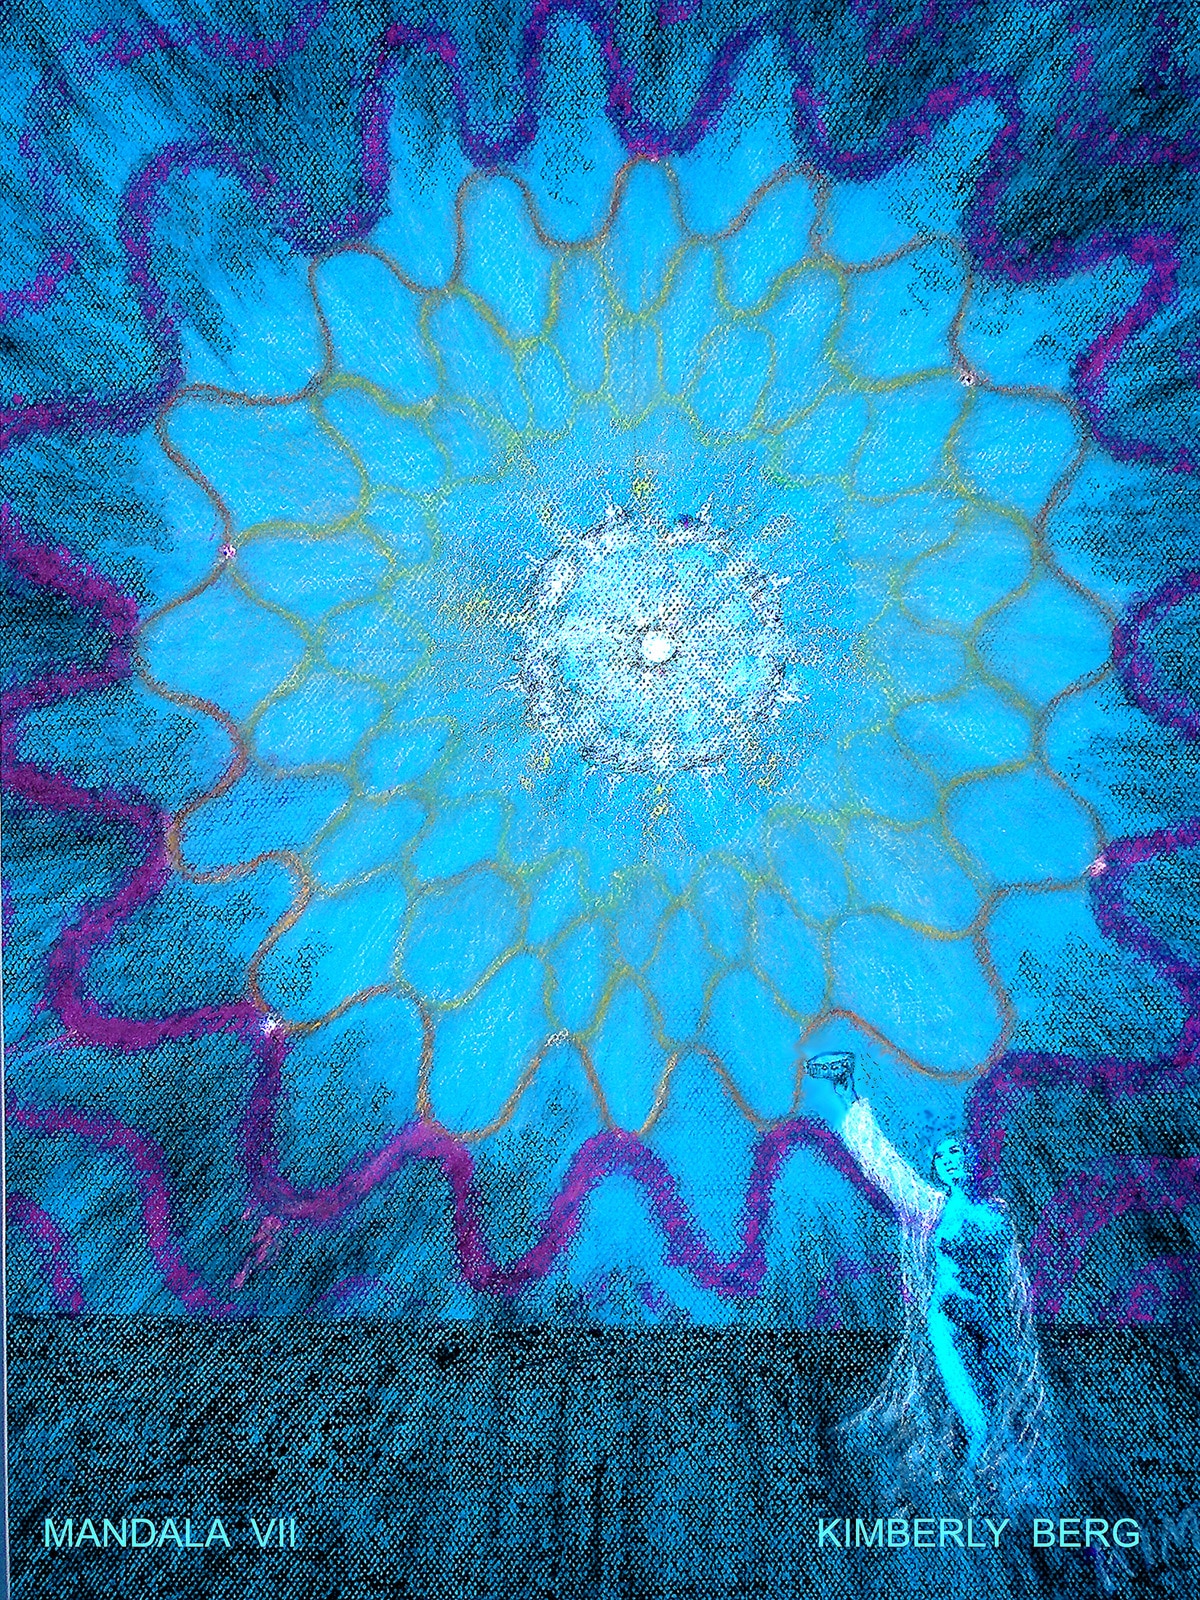 "Mandala VII" by Kimberly Berg